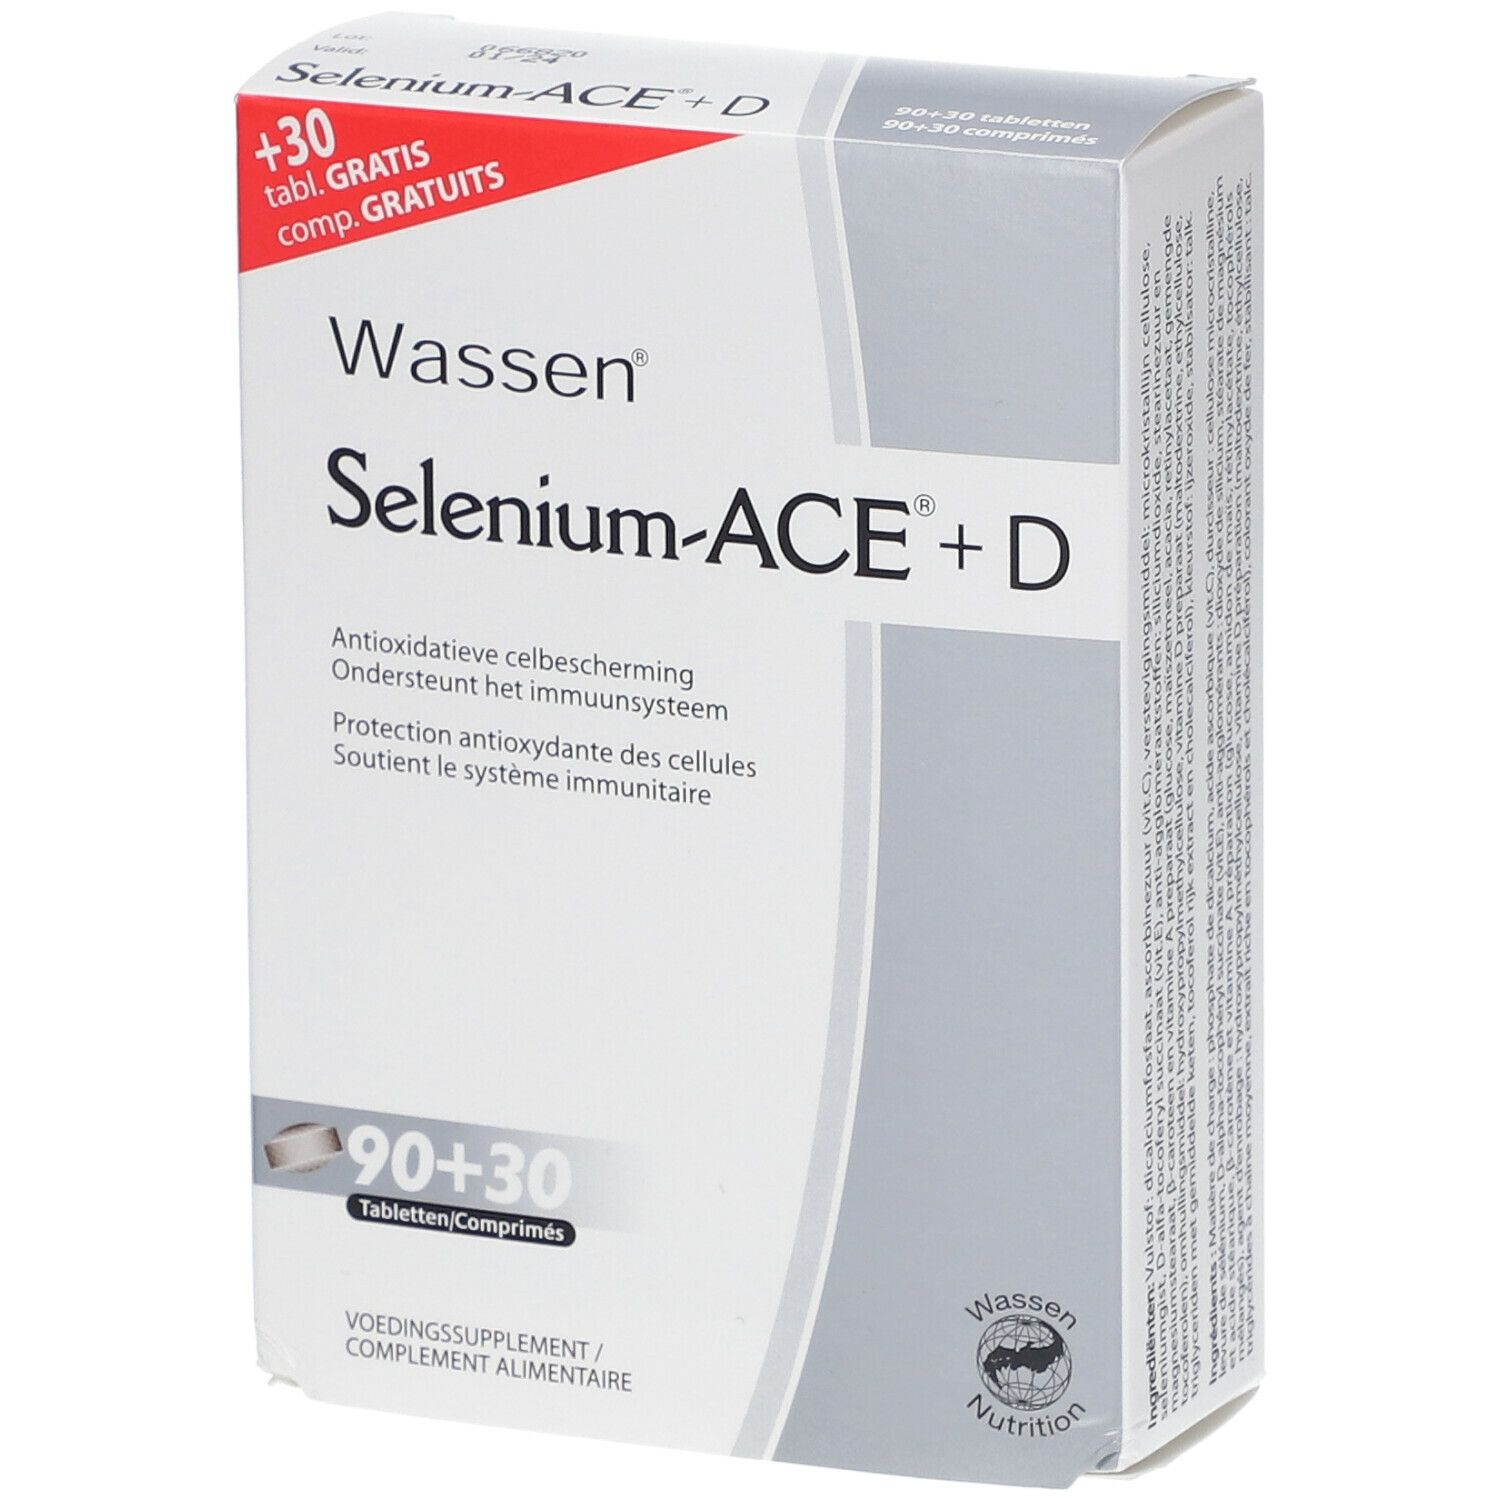 Wassen® Selenium-ACE+D + 30 Compresse Gratis